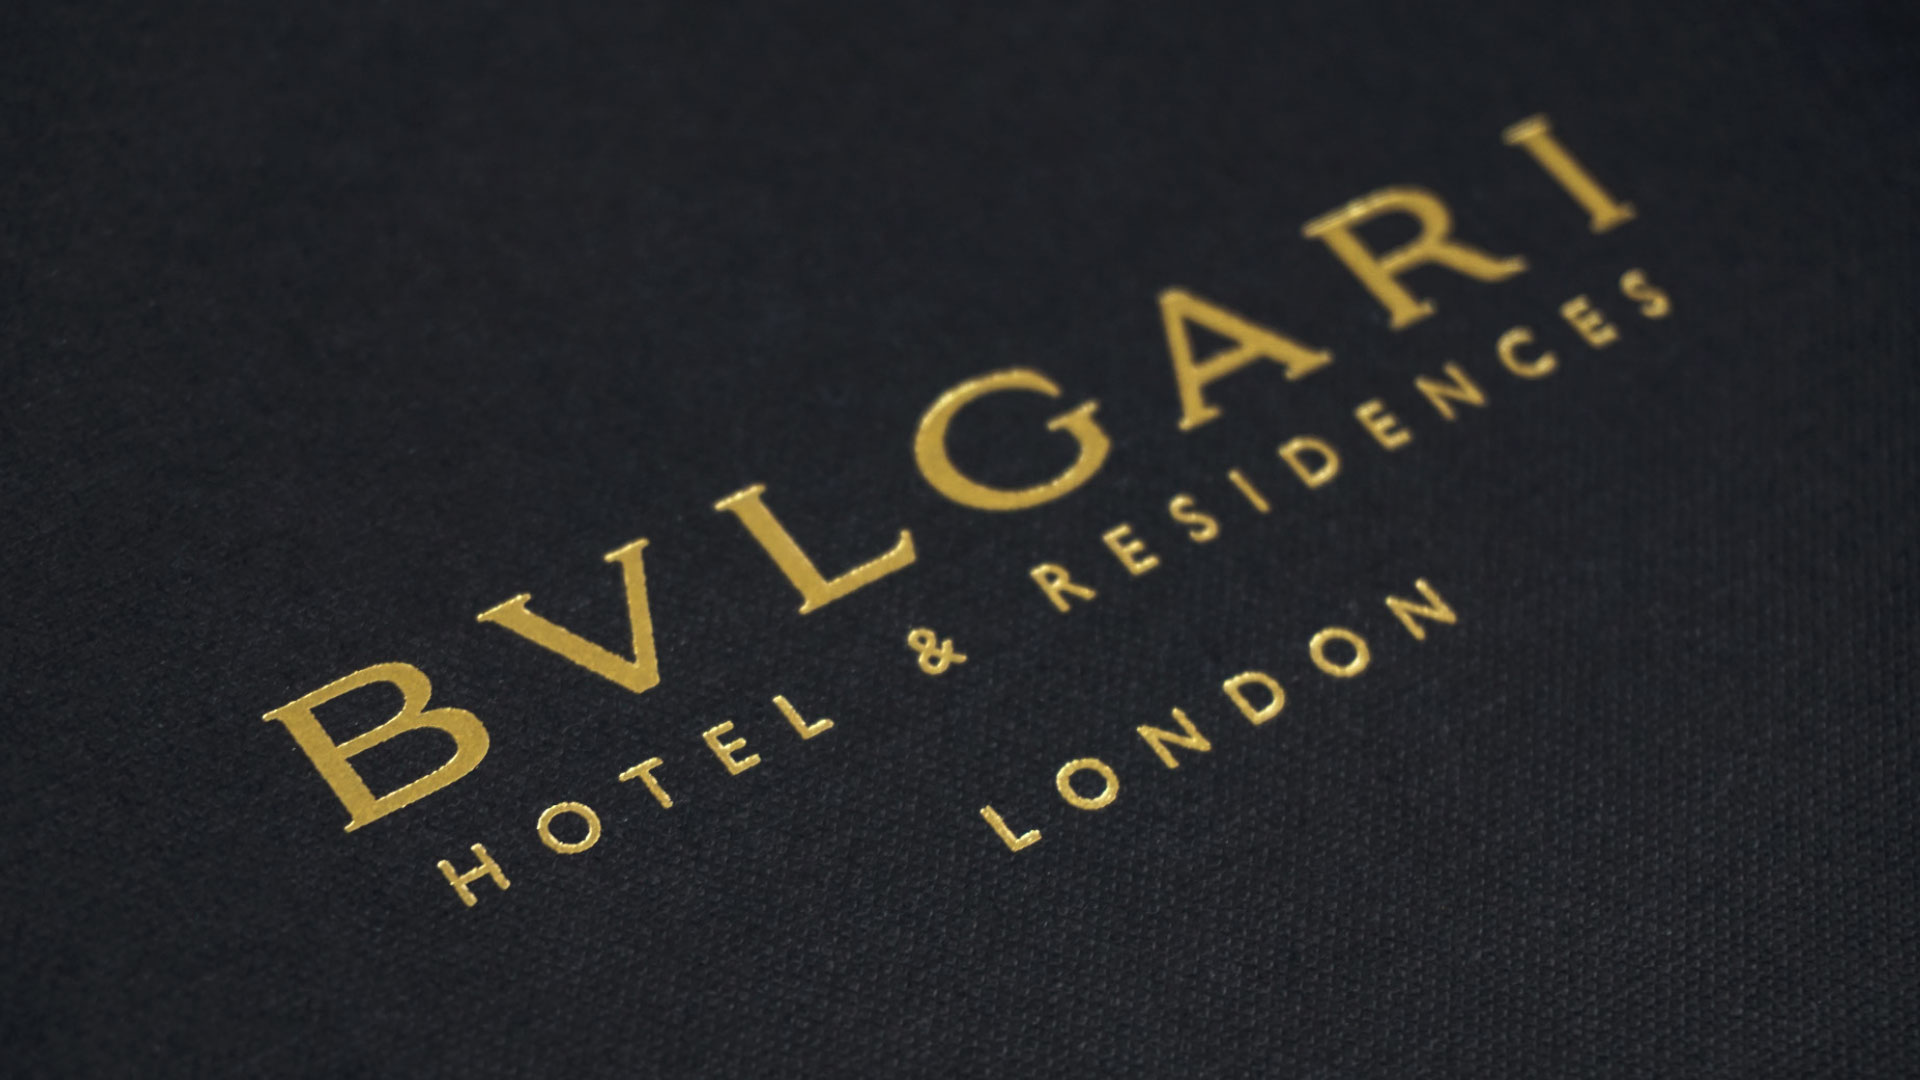 Bvlgari Hotel London - Consultants in Design